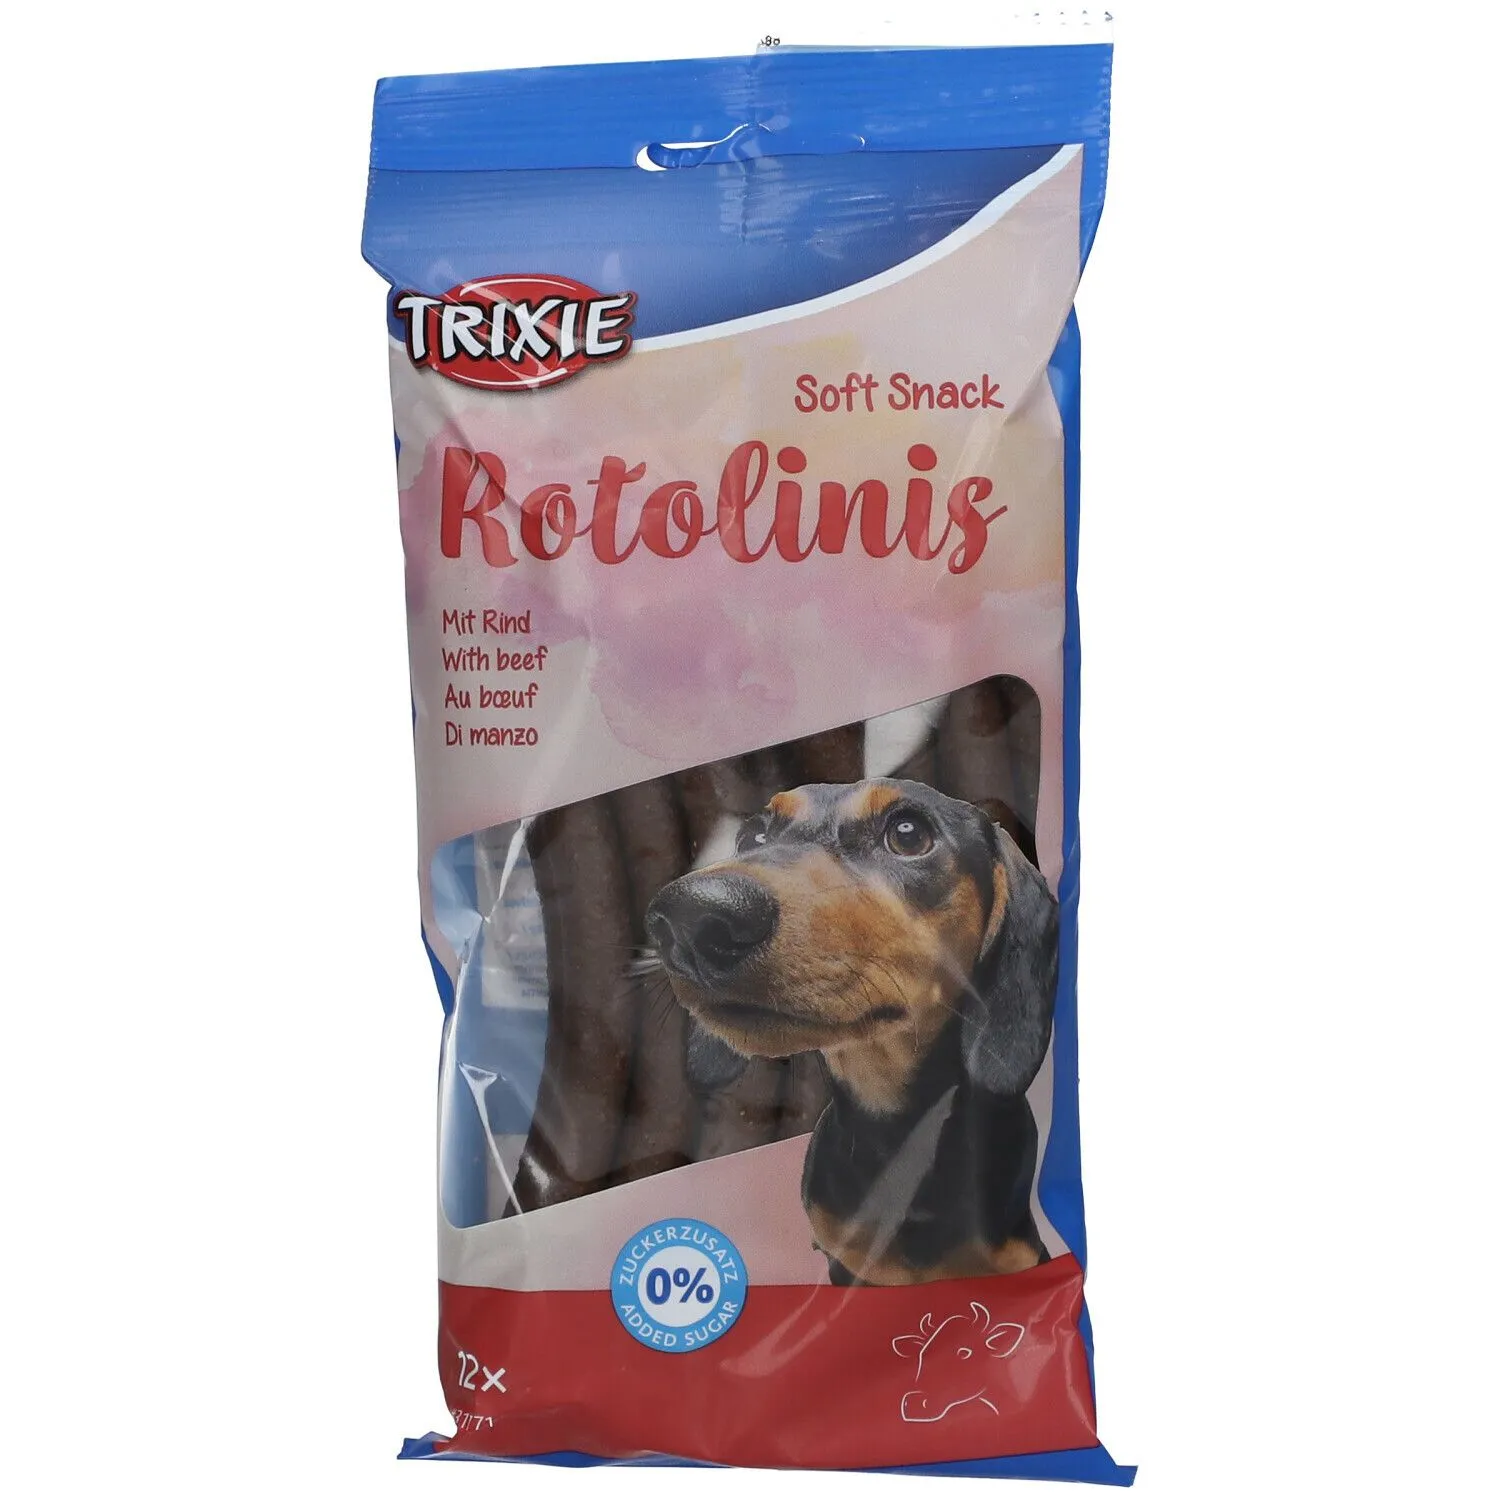  Rotolinis Soft Snack